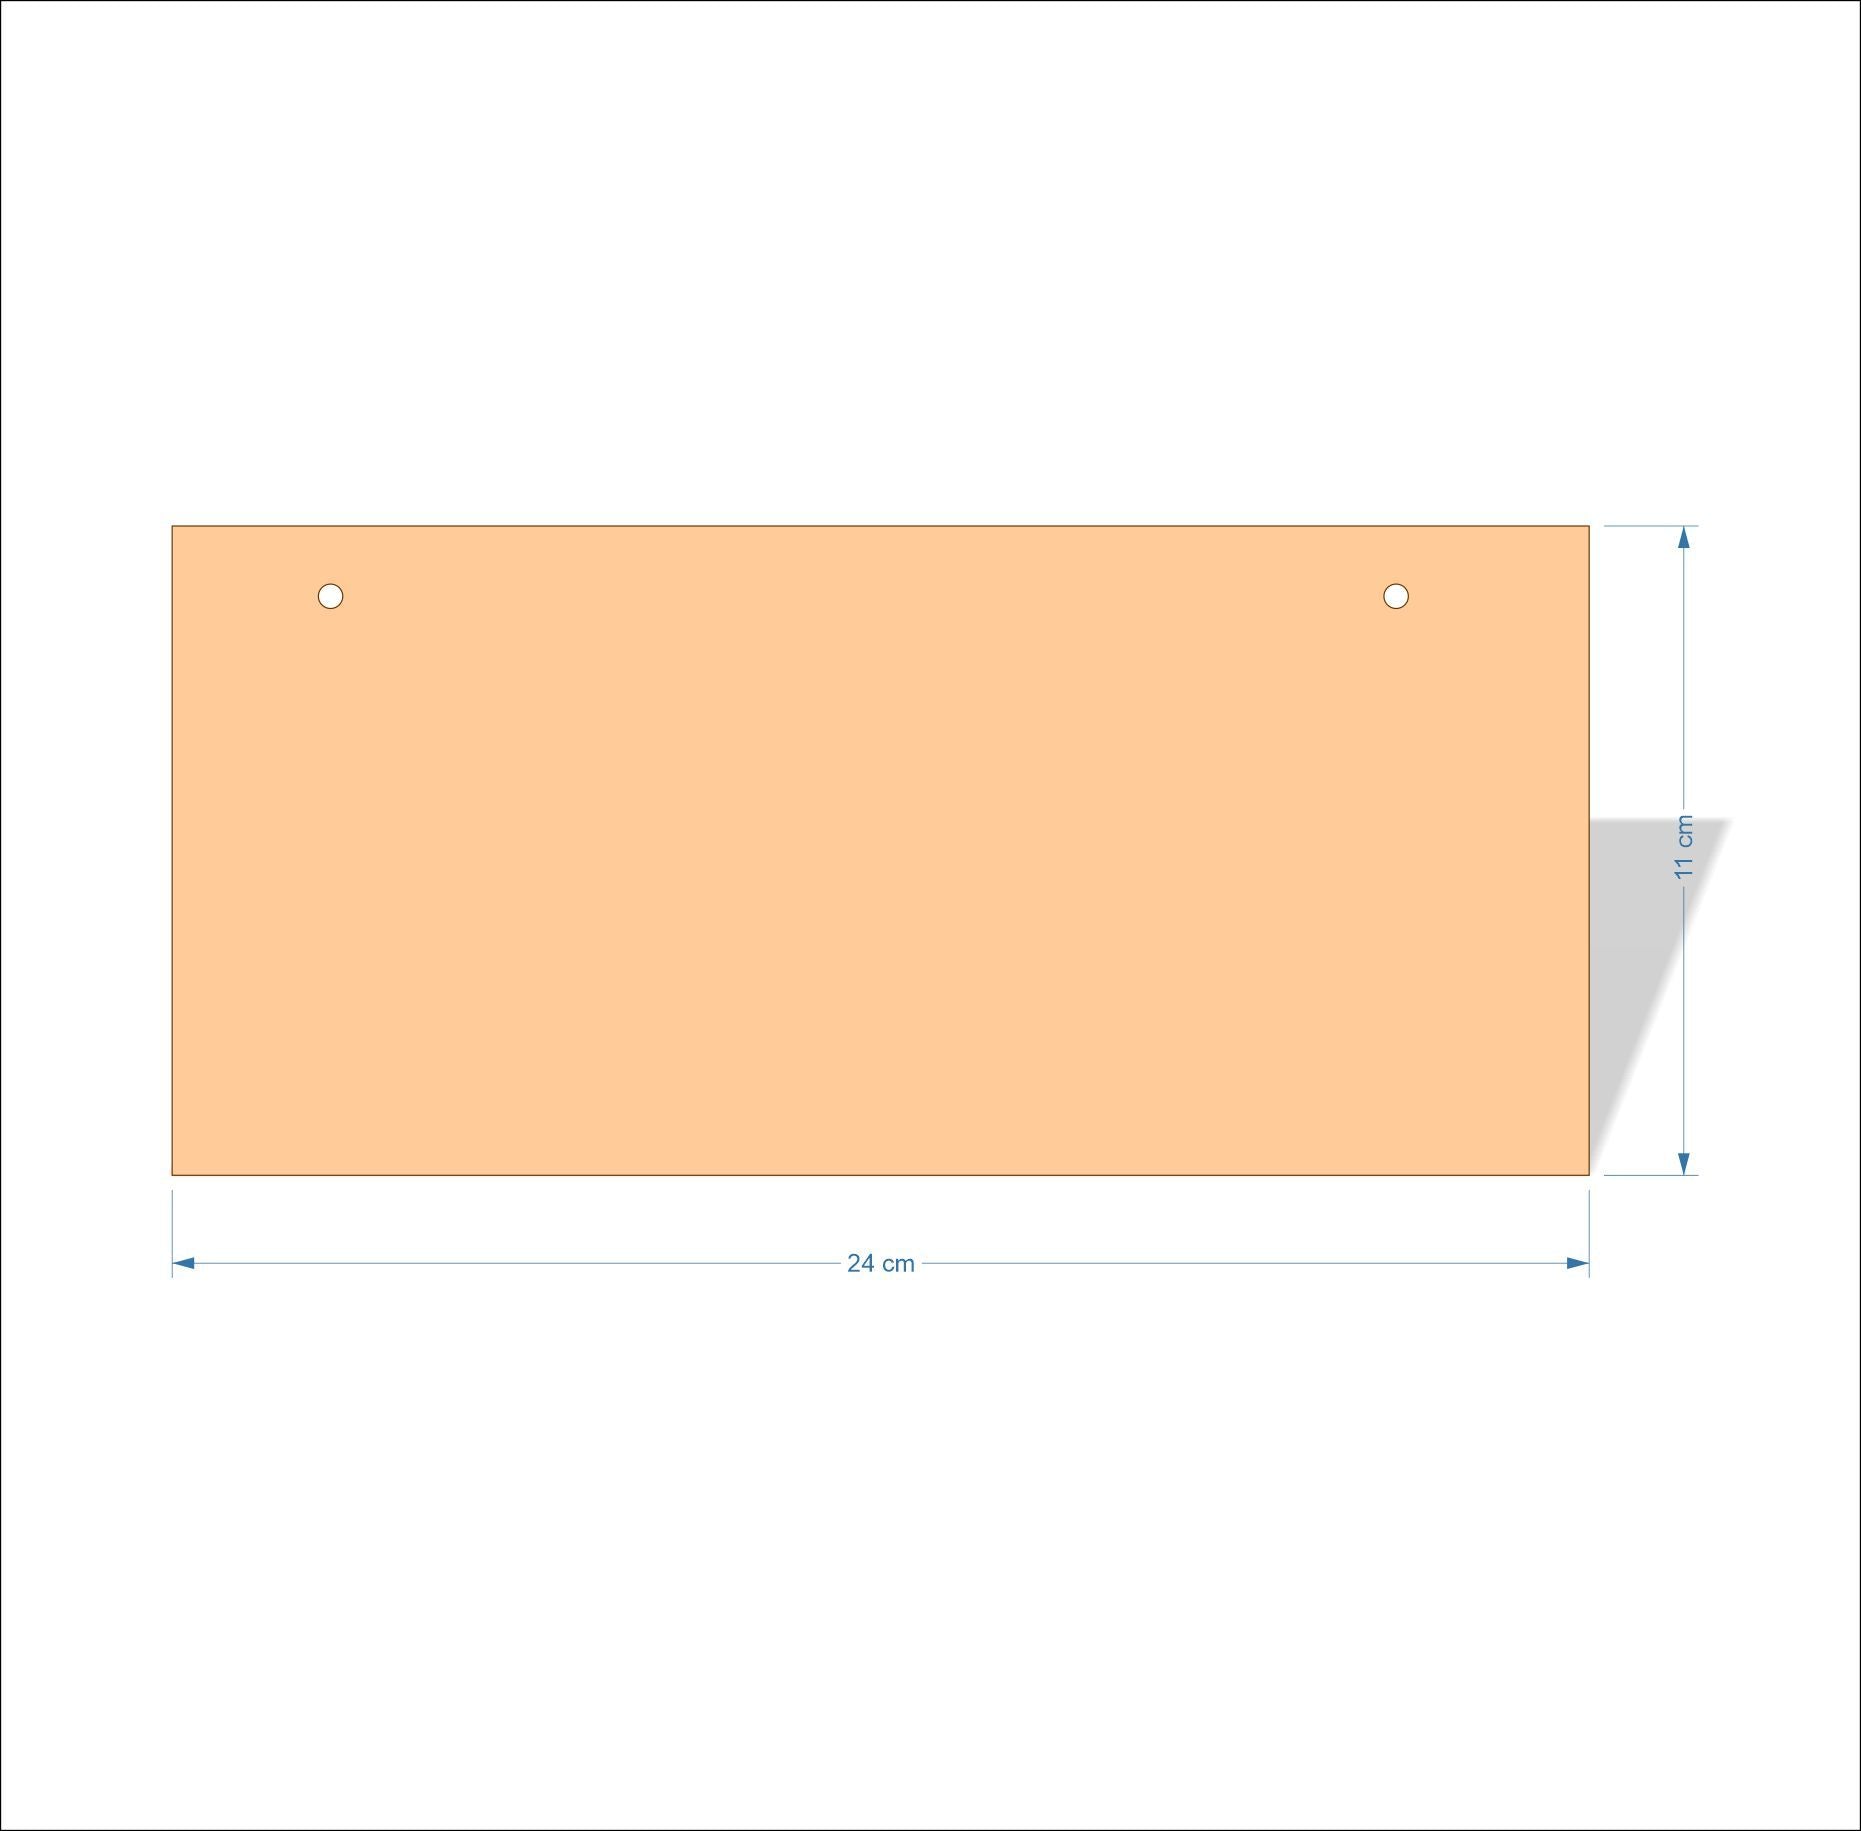 24 cm X 11 cm 3mm MDF Plaques with square corners